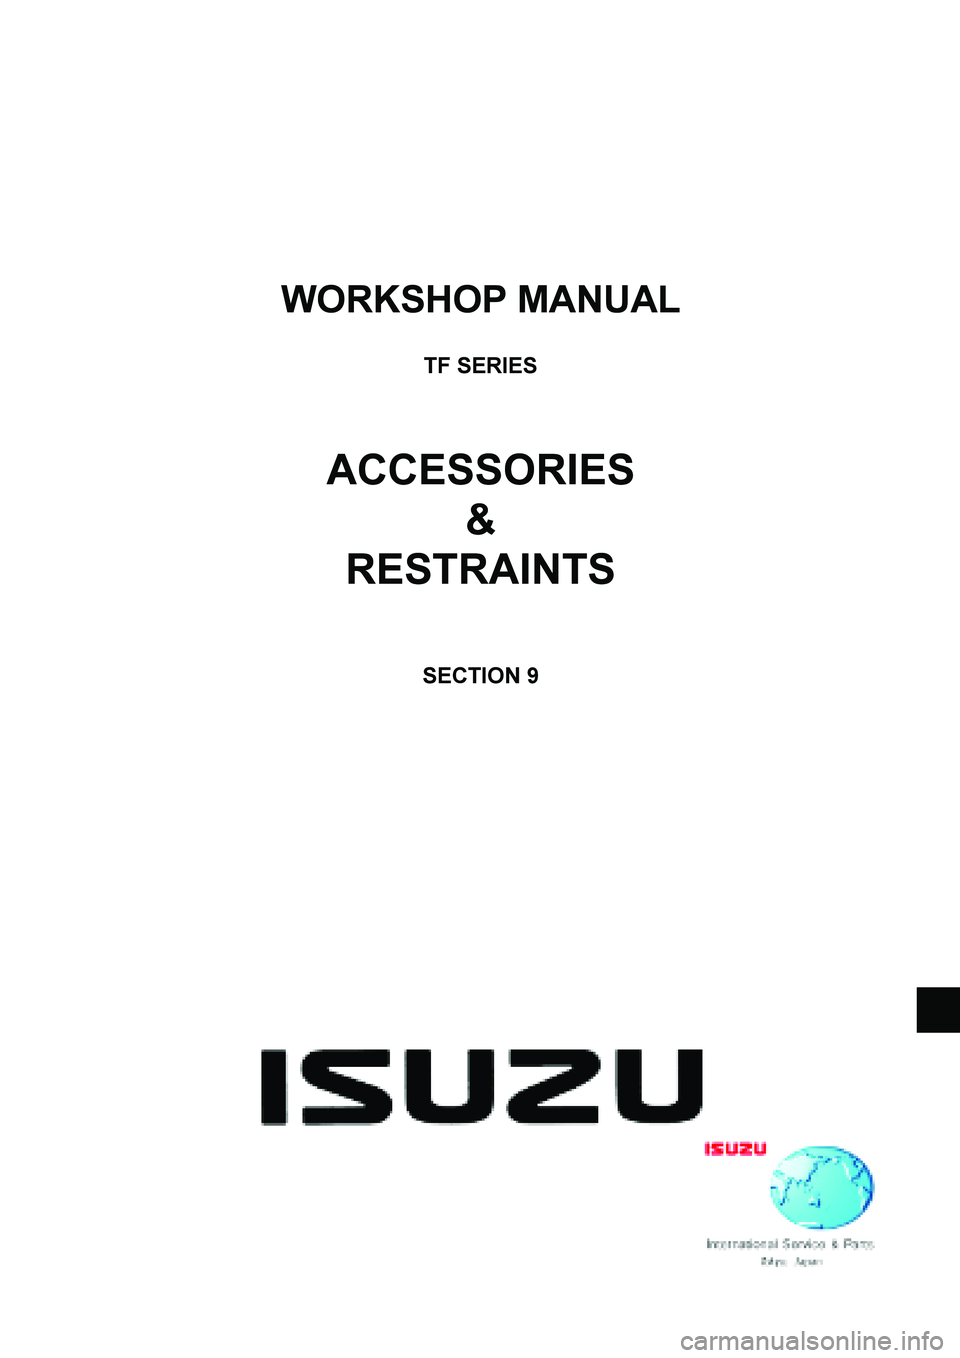 ISUZU TF SERIES 2004  Workshop Manual  
WORKSHOP MANUAL 
 
TF SERIES 
 
 
 
ACCESSORIES 
& 
RESTRAINTS 
 
 
 
SECTION 9 
 
 
  